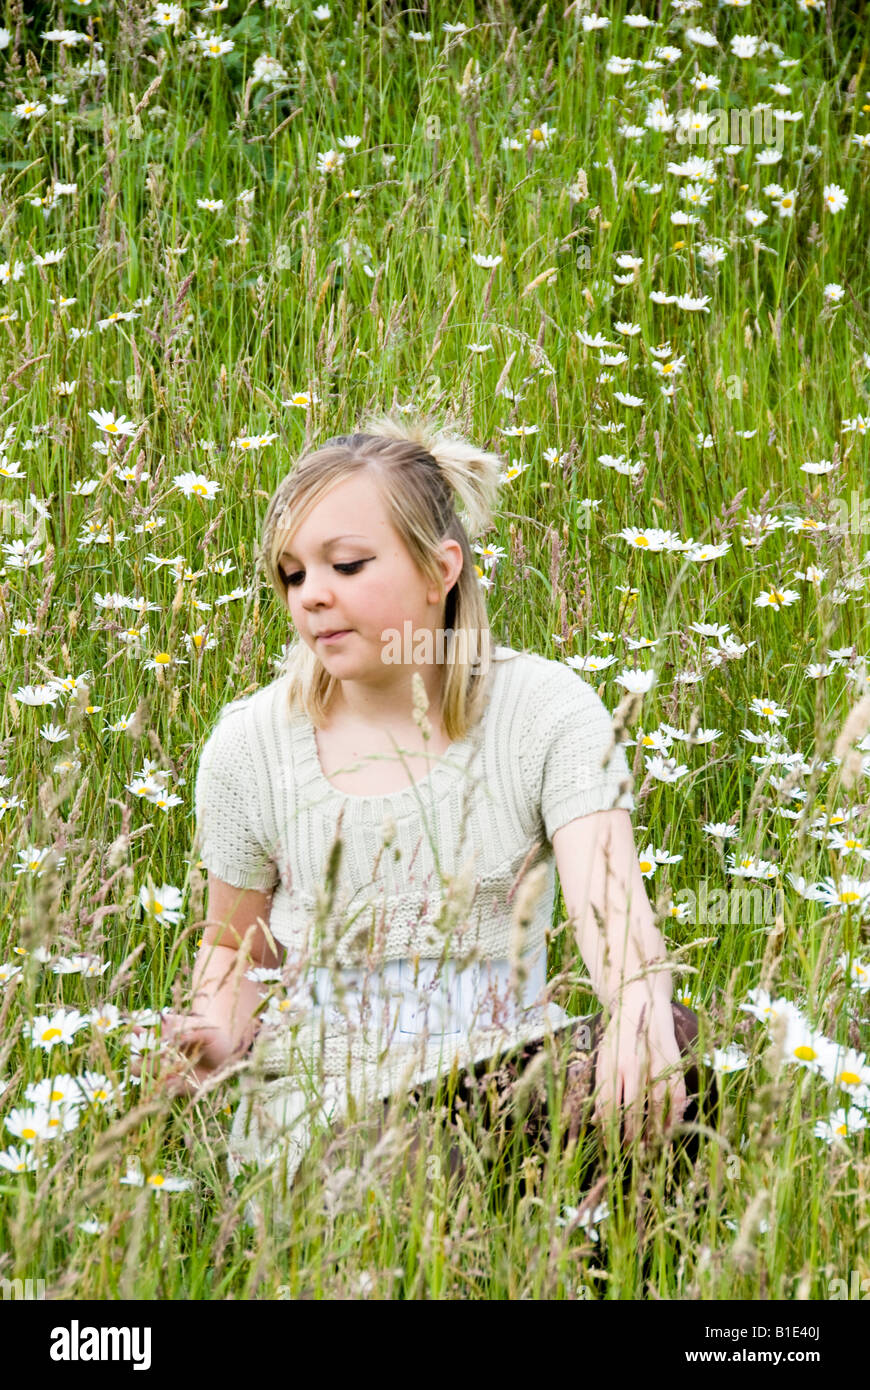 blonde female teenager sitting amongst wild flowers Stock Photo